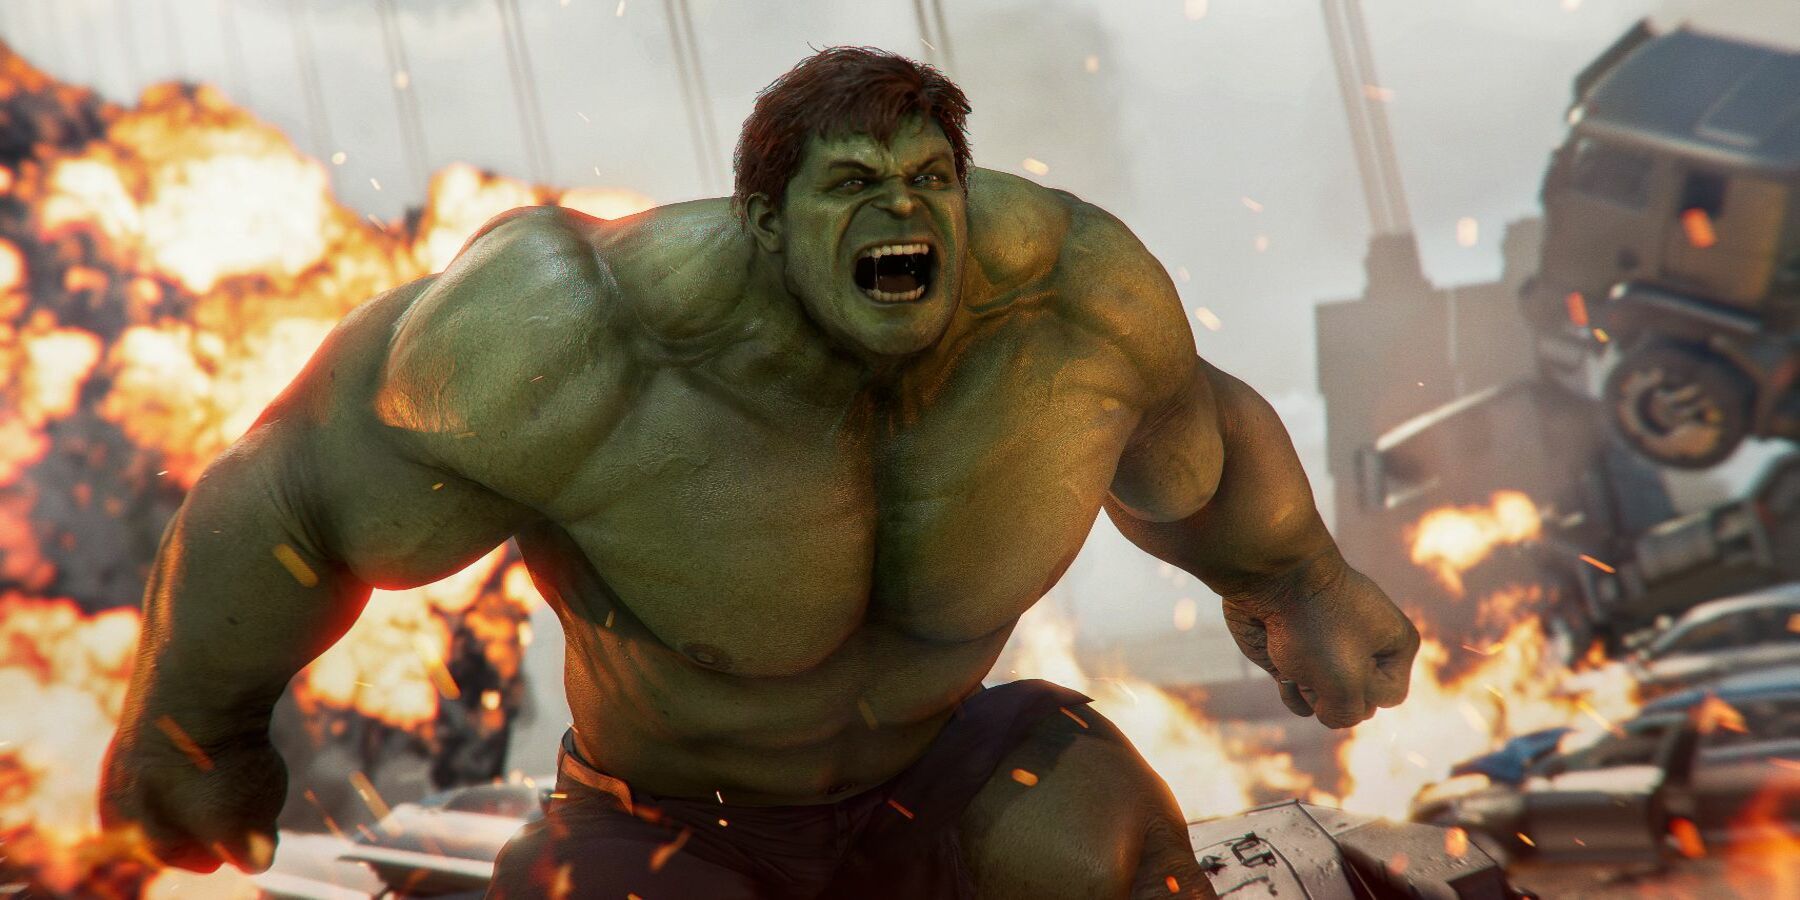 Old Hulk in Marvel's Avengers Game Wallpapers